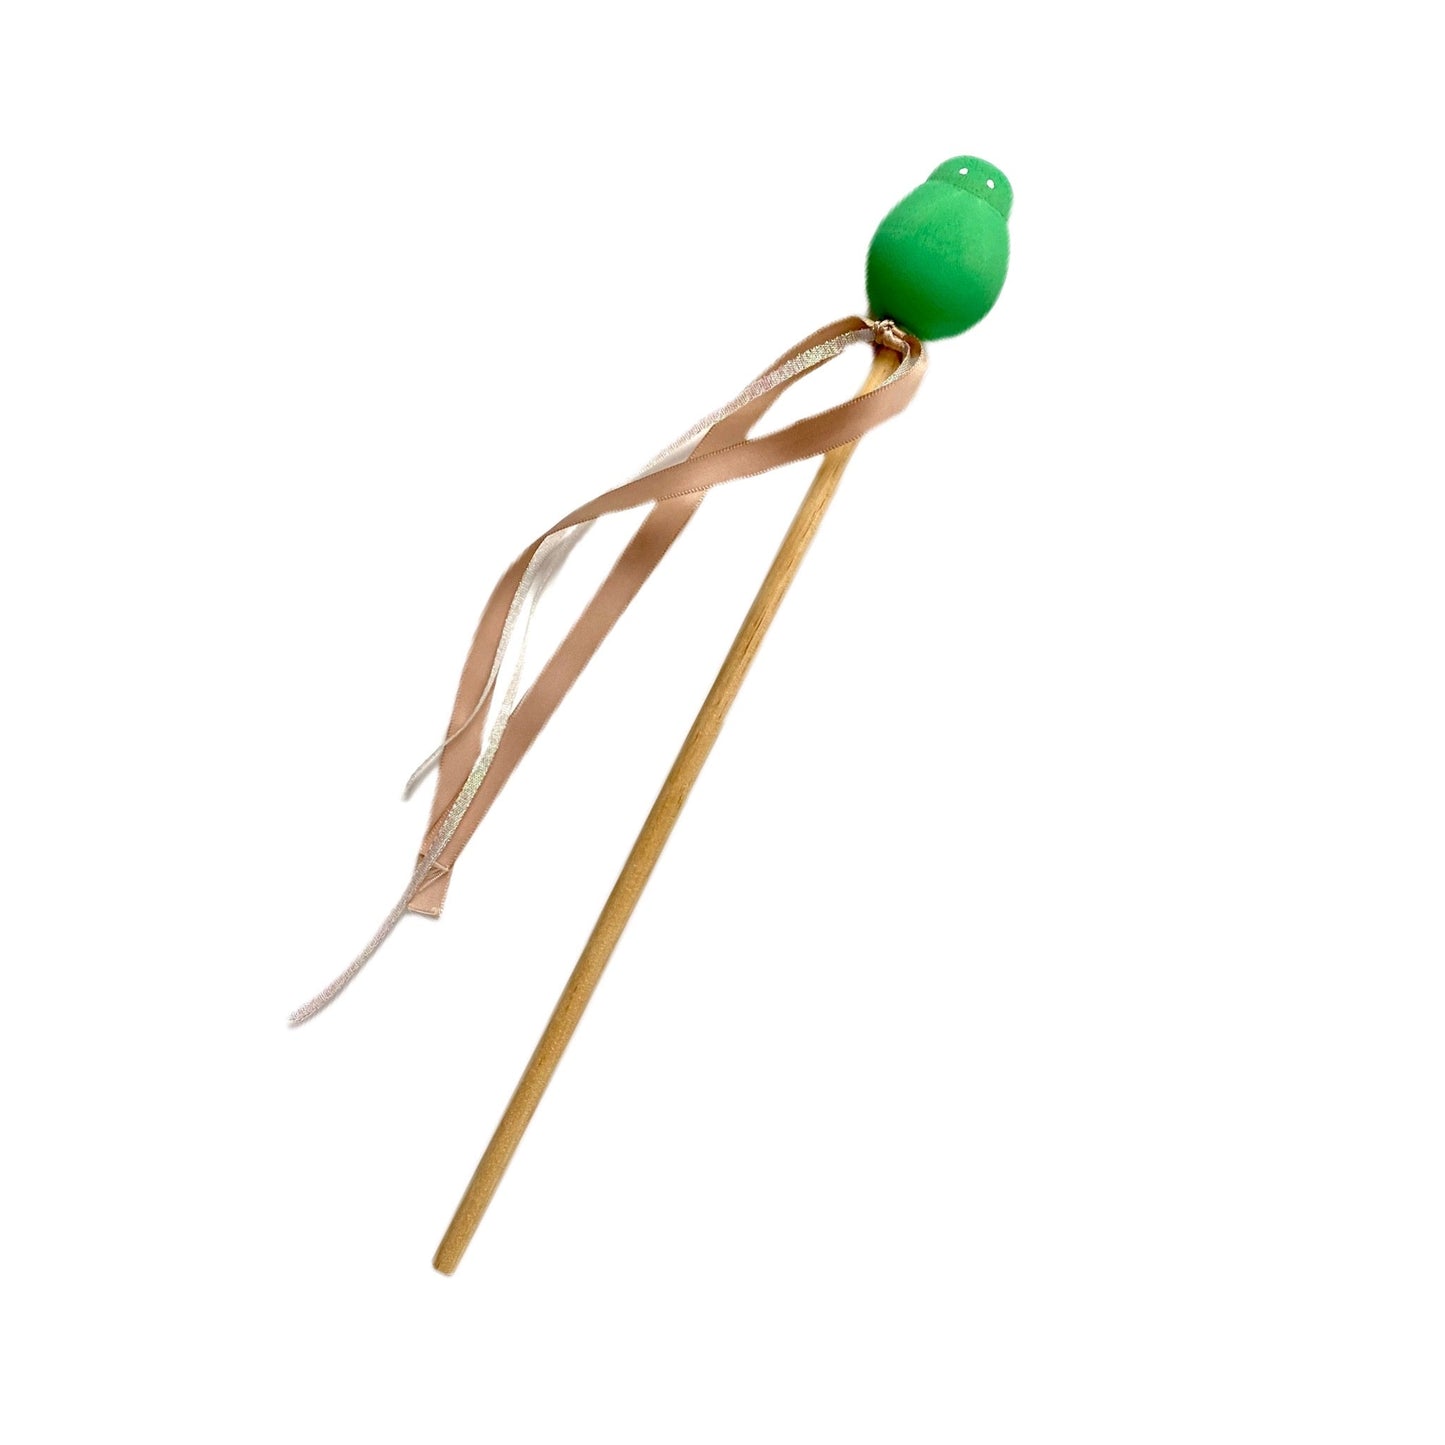 Wooden wand for ladybug costume.